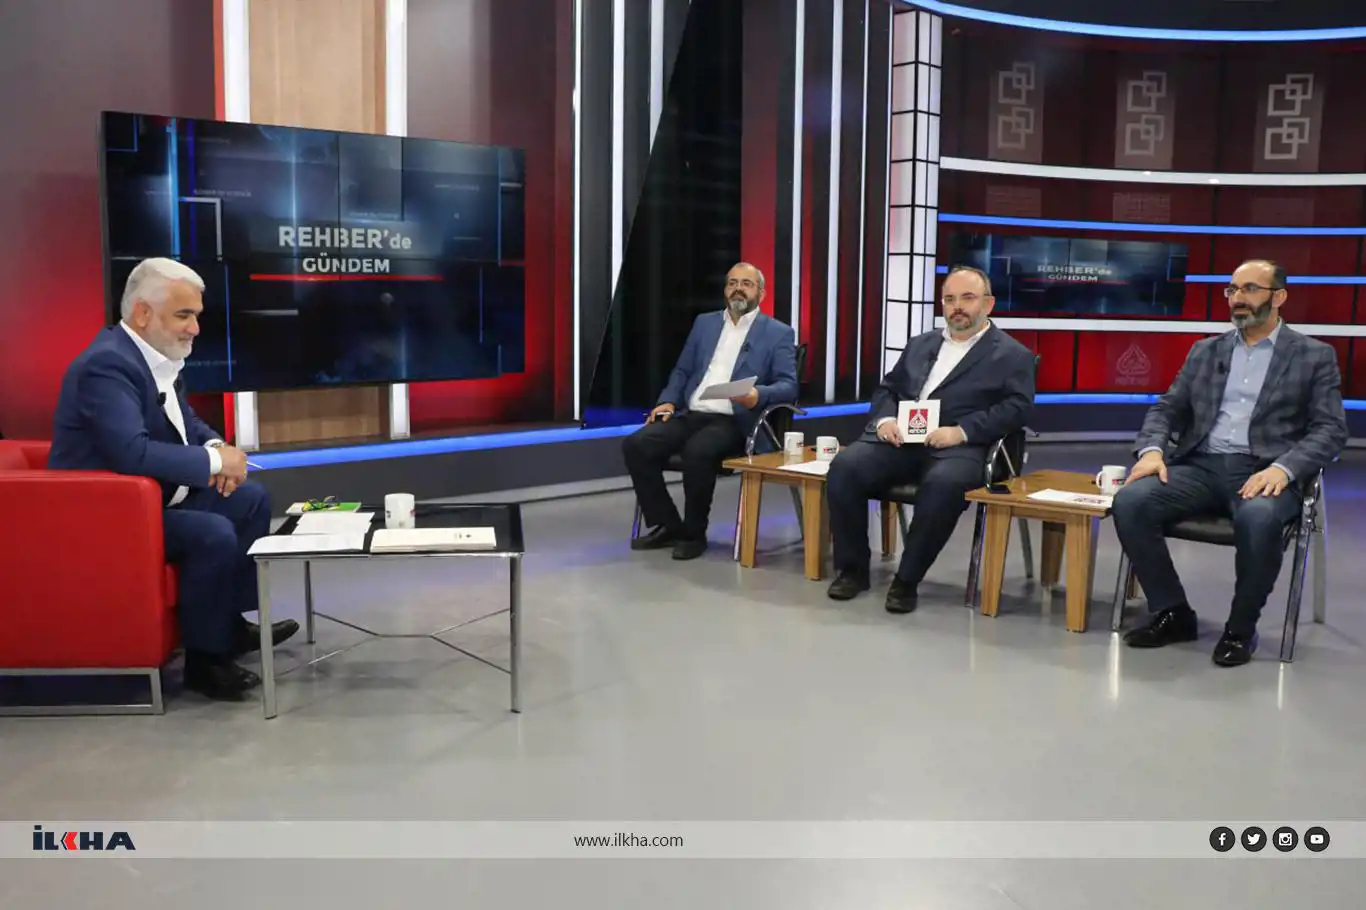 Yapıcıoğlu criticizes Nation Alliance and addresses party's objectives and challenges